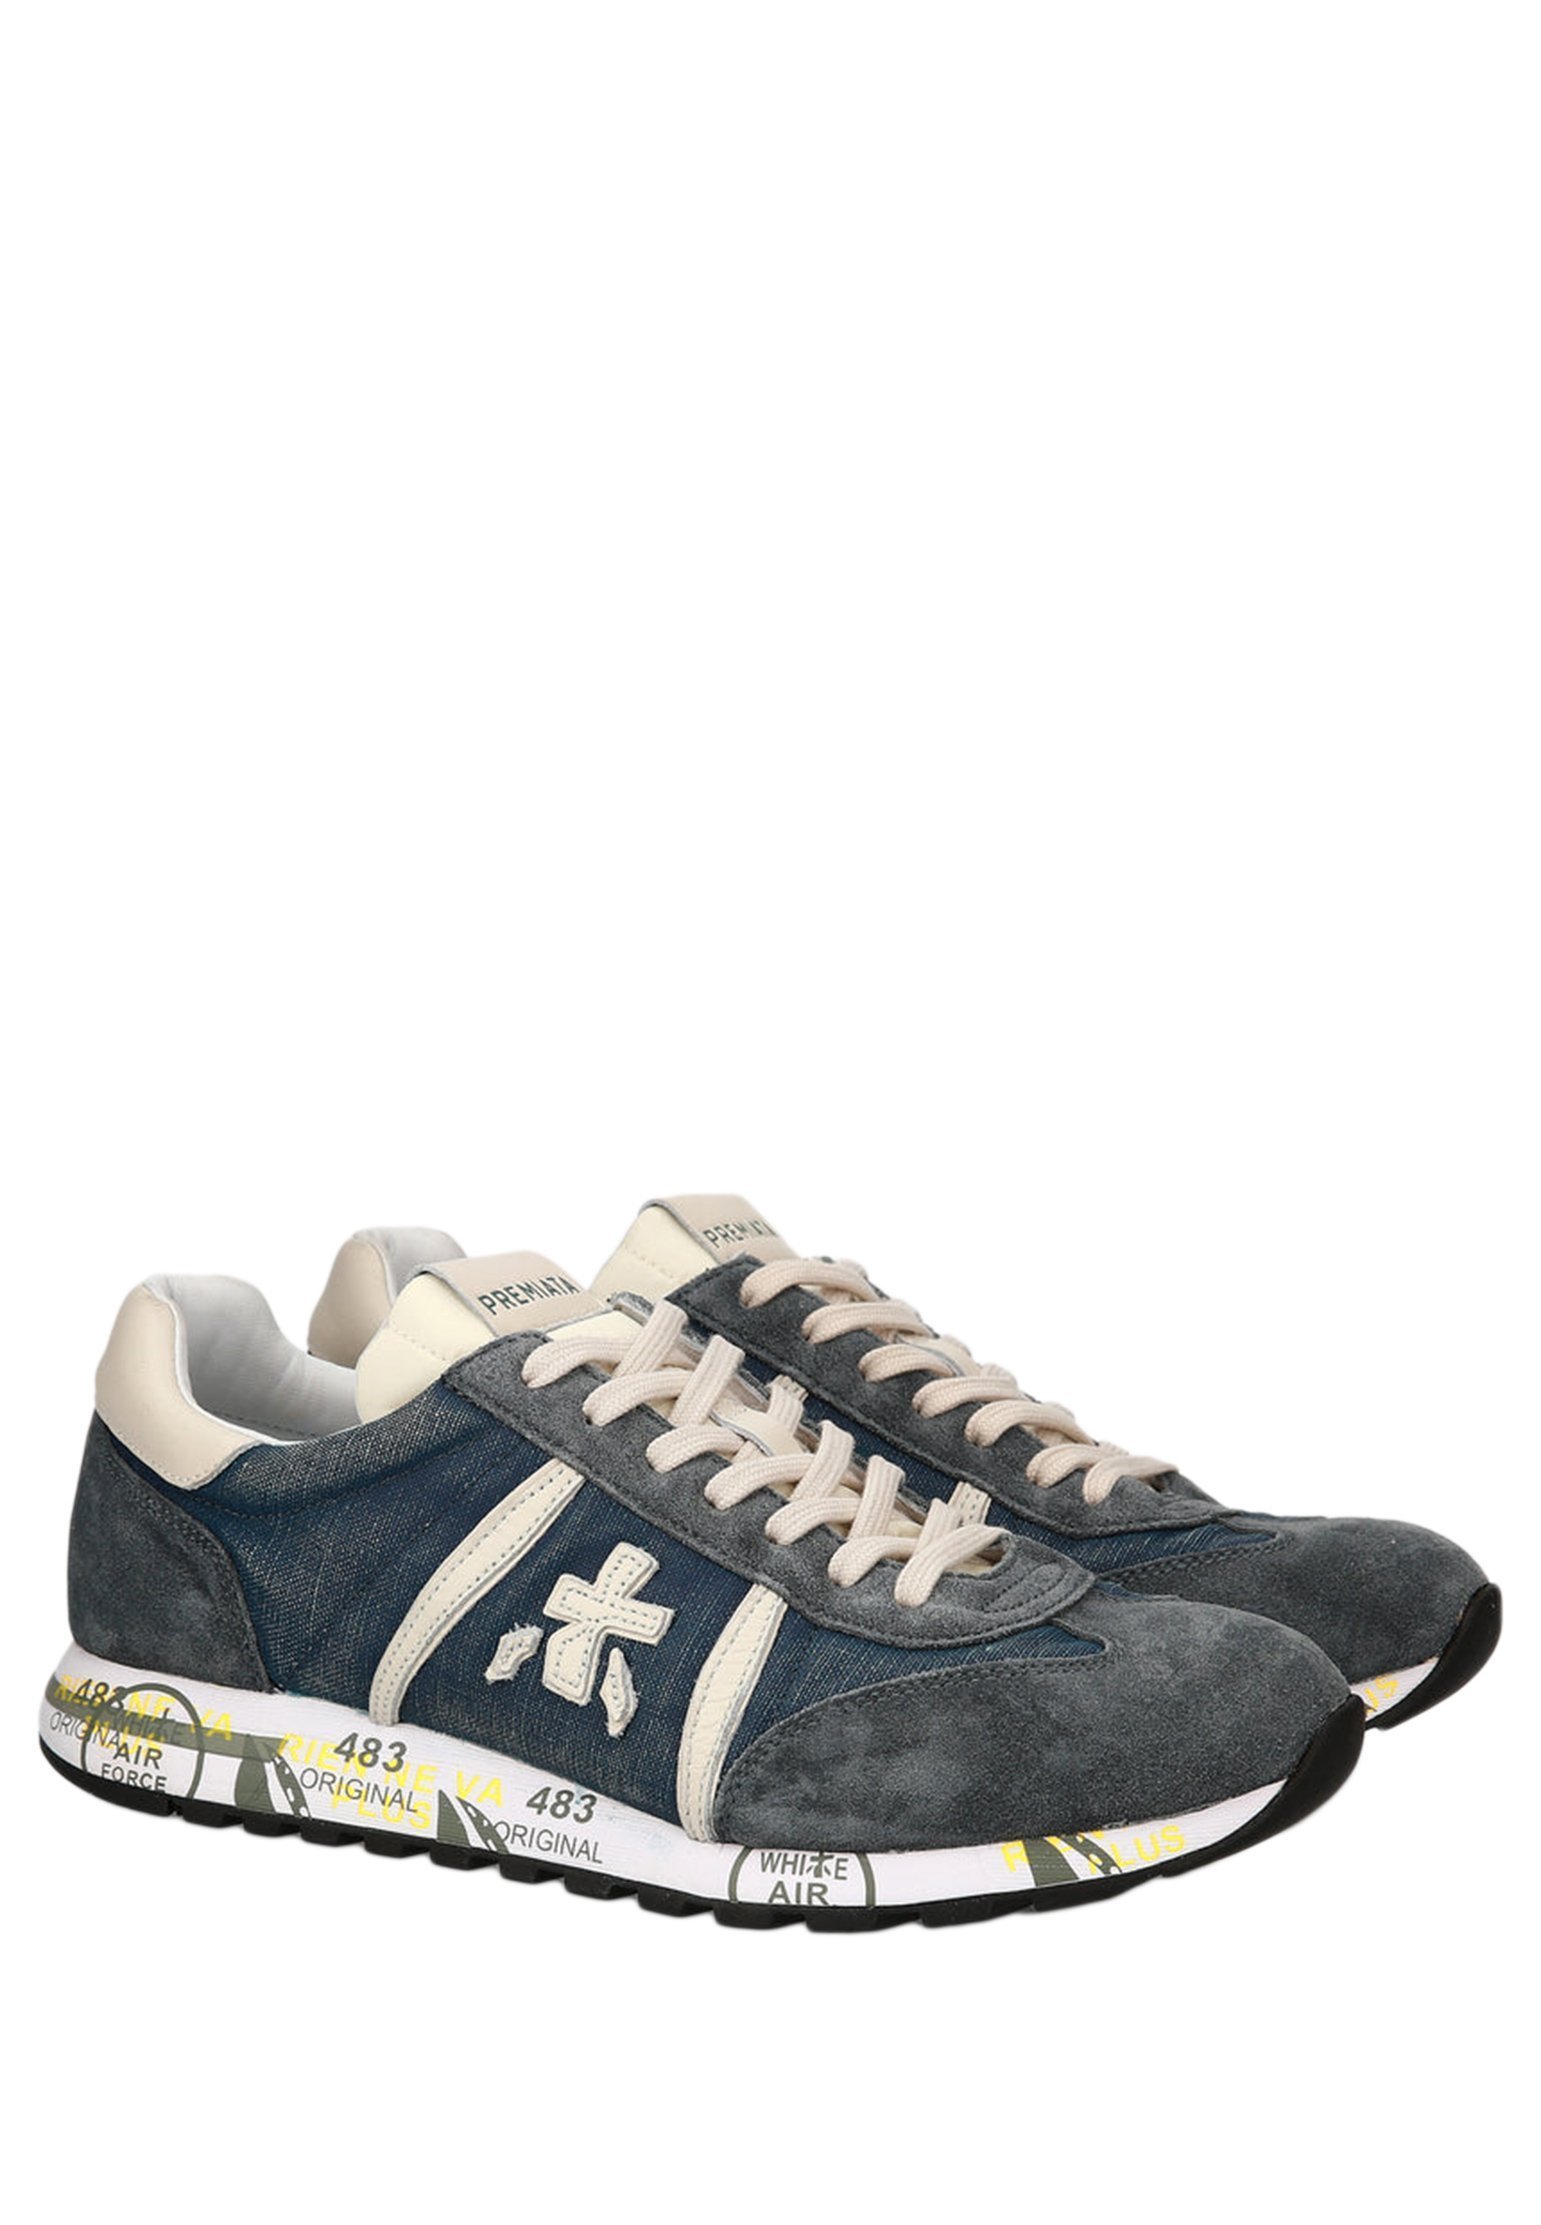 Sneakers PREMIATA Color: grey (Code: 4196) in online store Allure